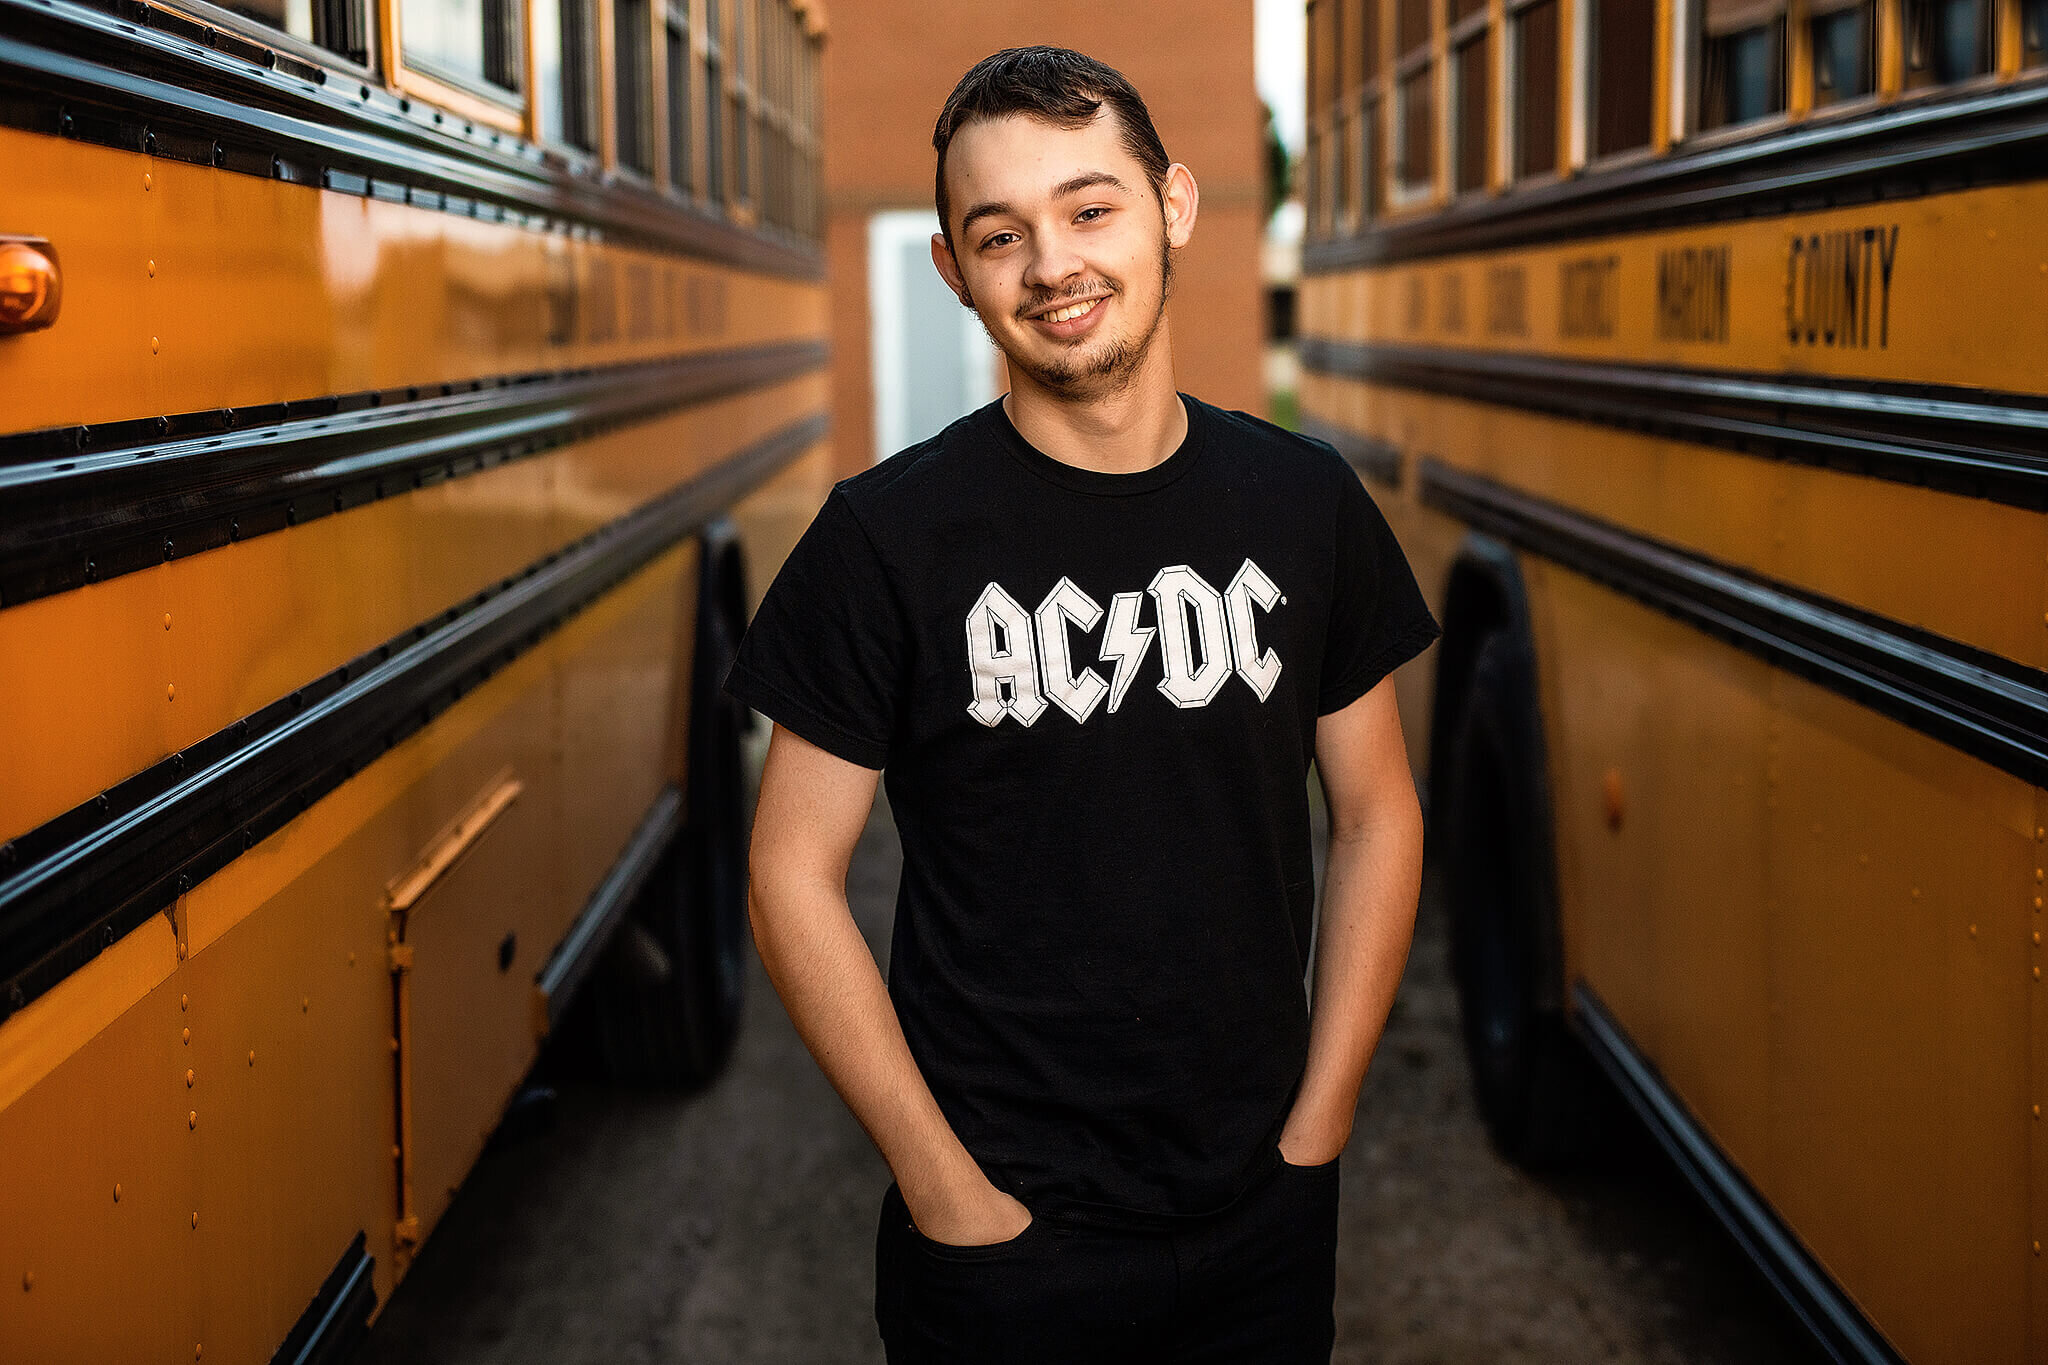 High school senior boy wearing acdc shirt standing between buses at school in marion ohio